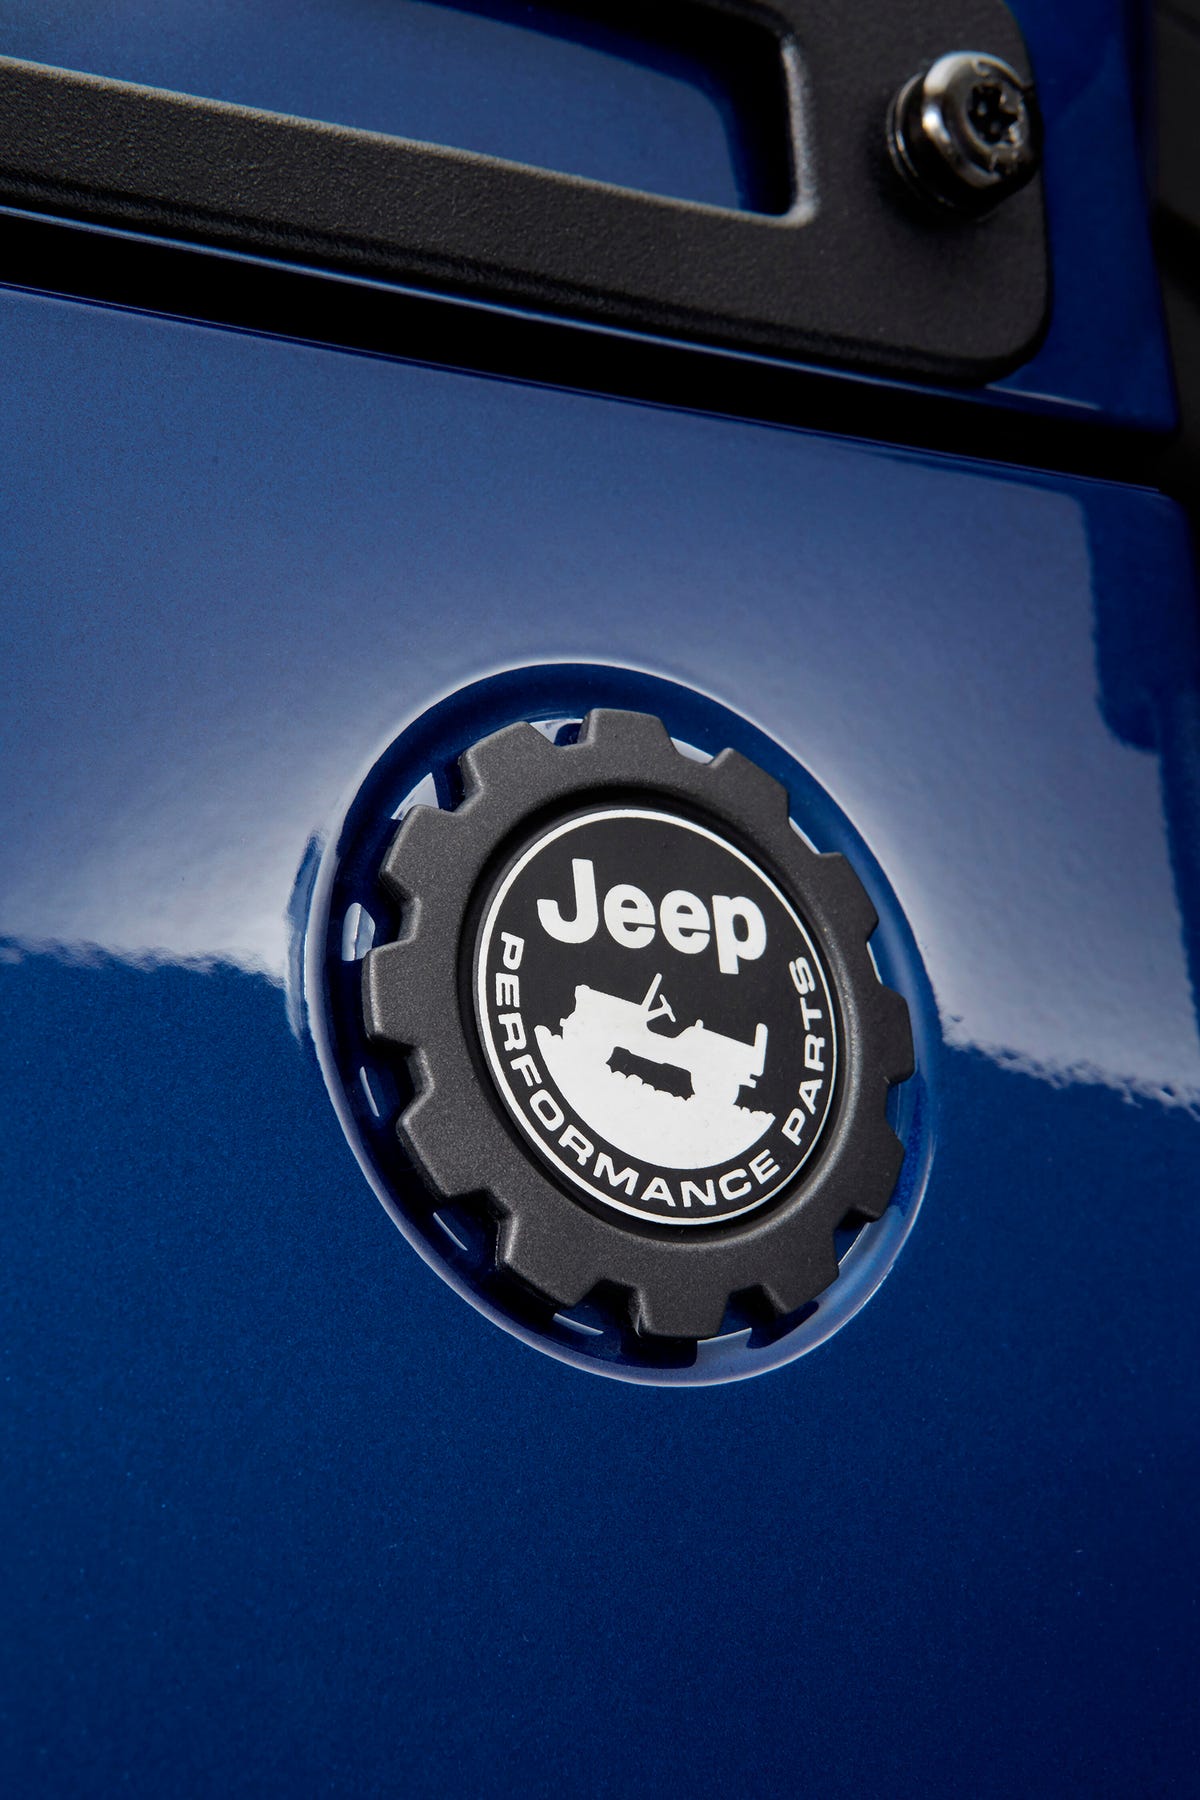 2020 Jeep Wrangler JPP limited edition